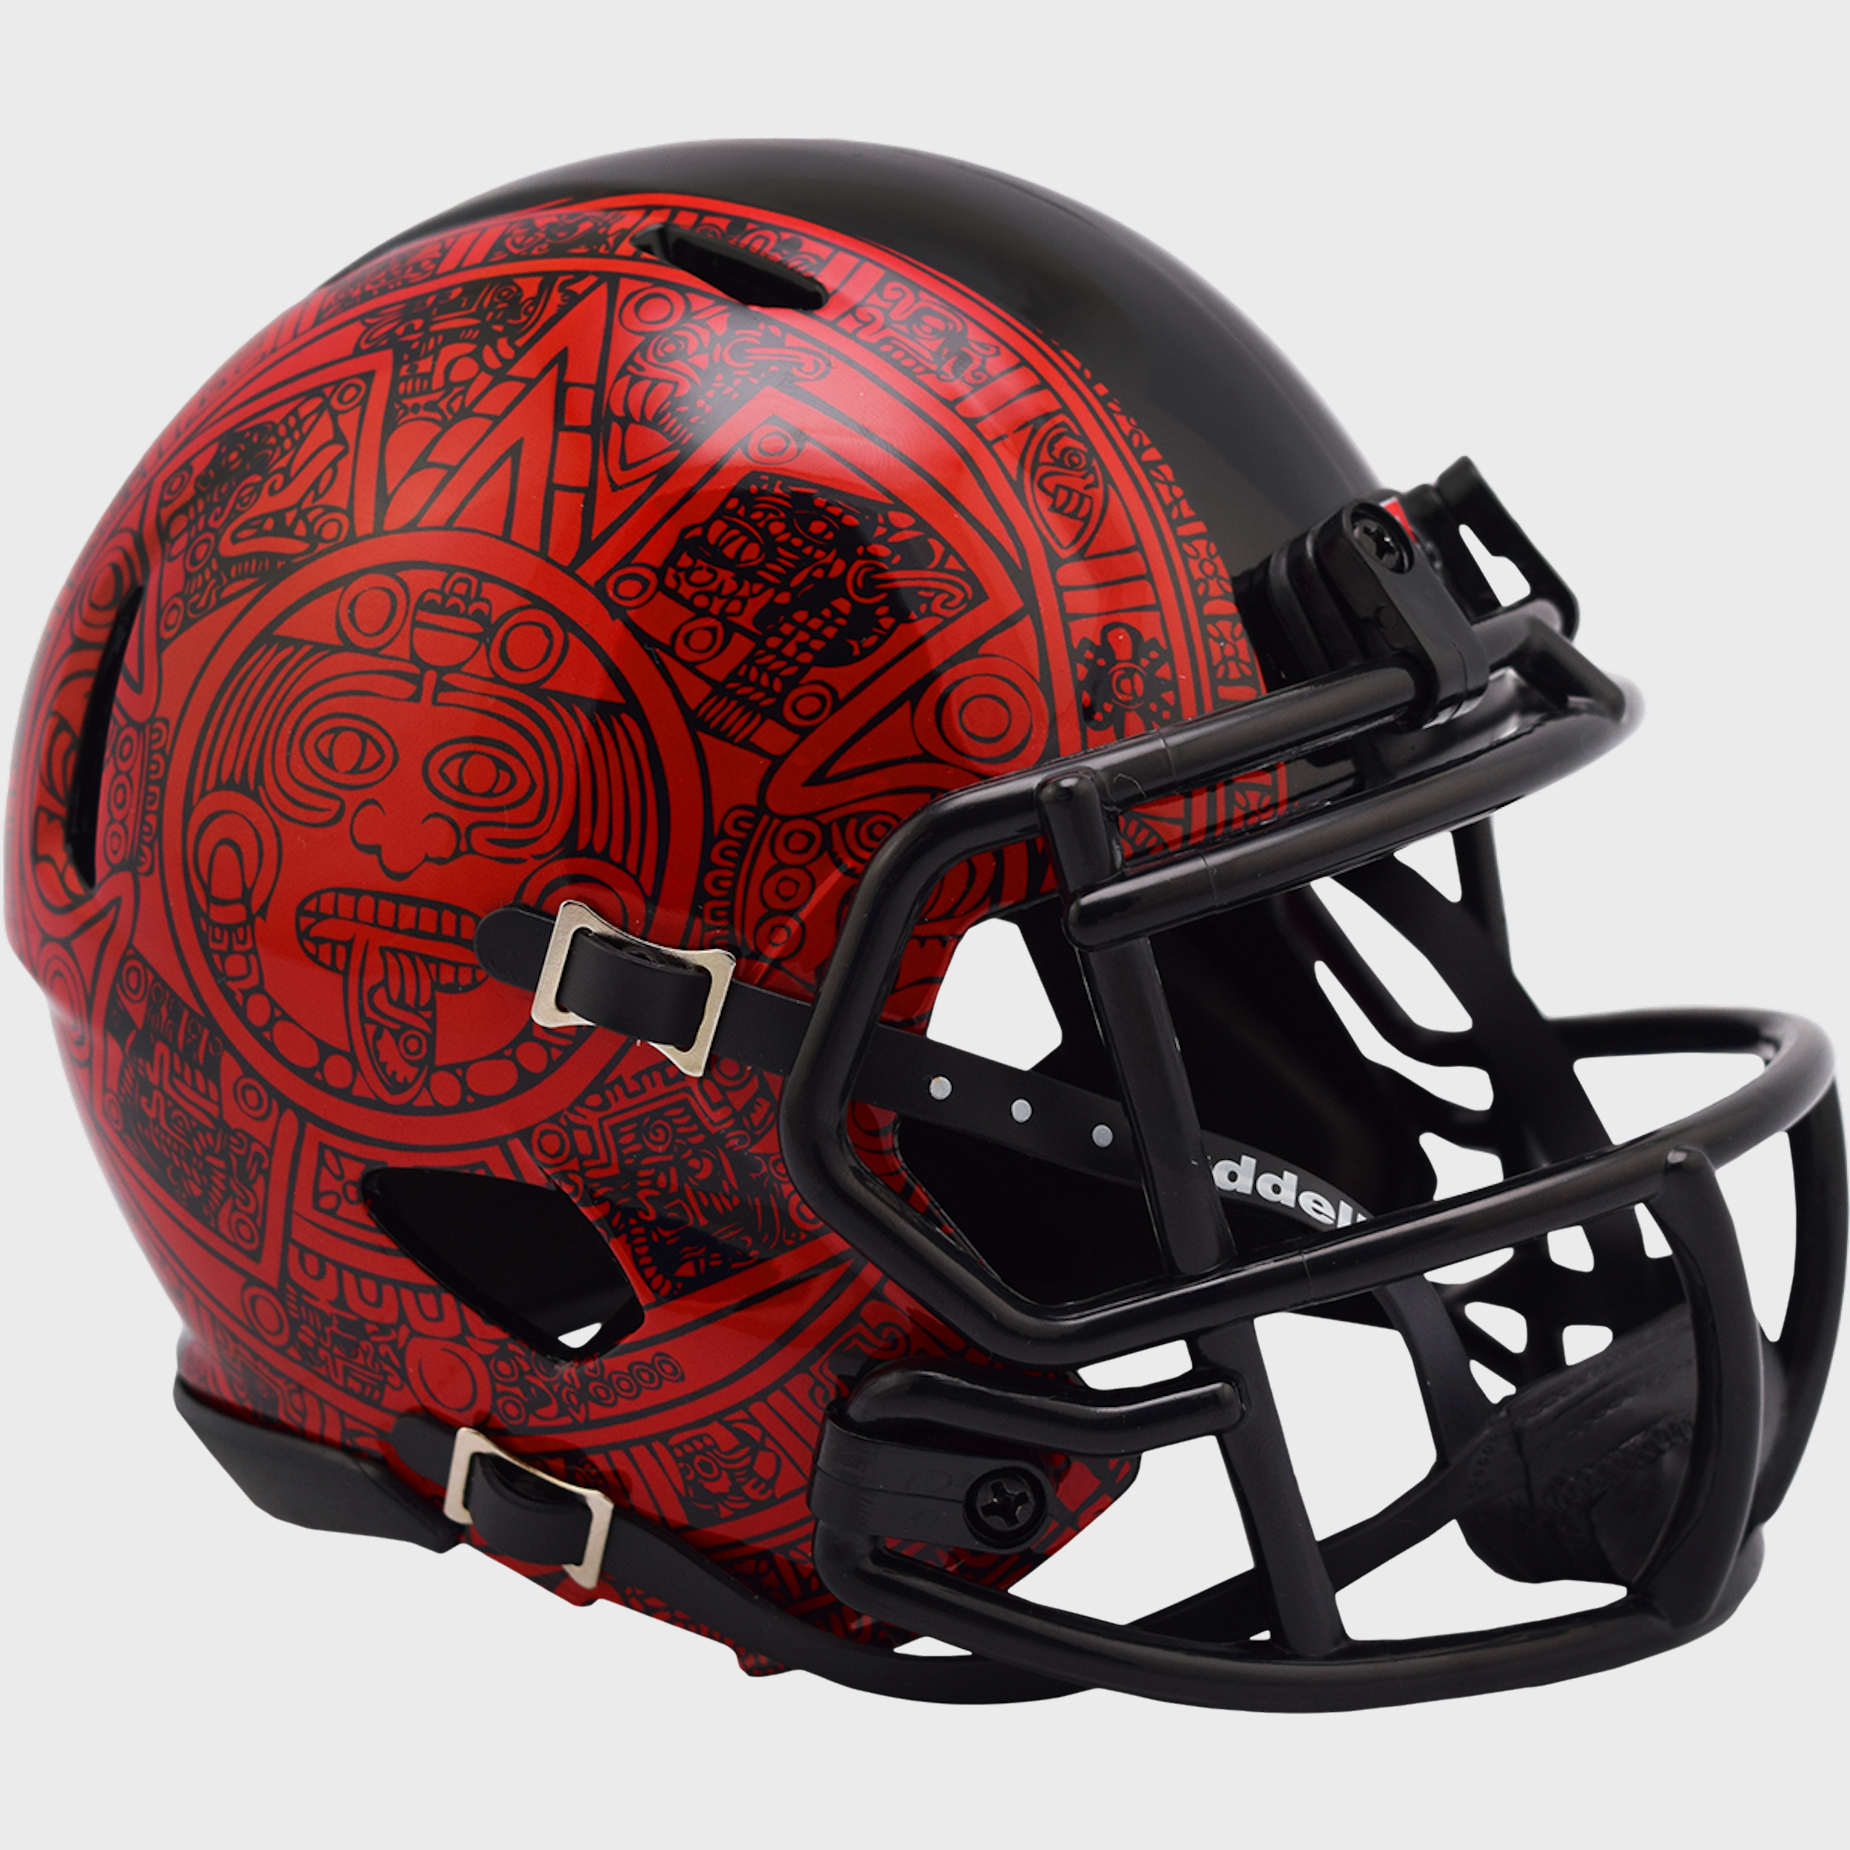 San Diego State Aztecs mini helmet